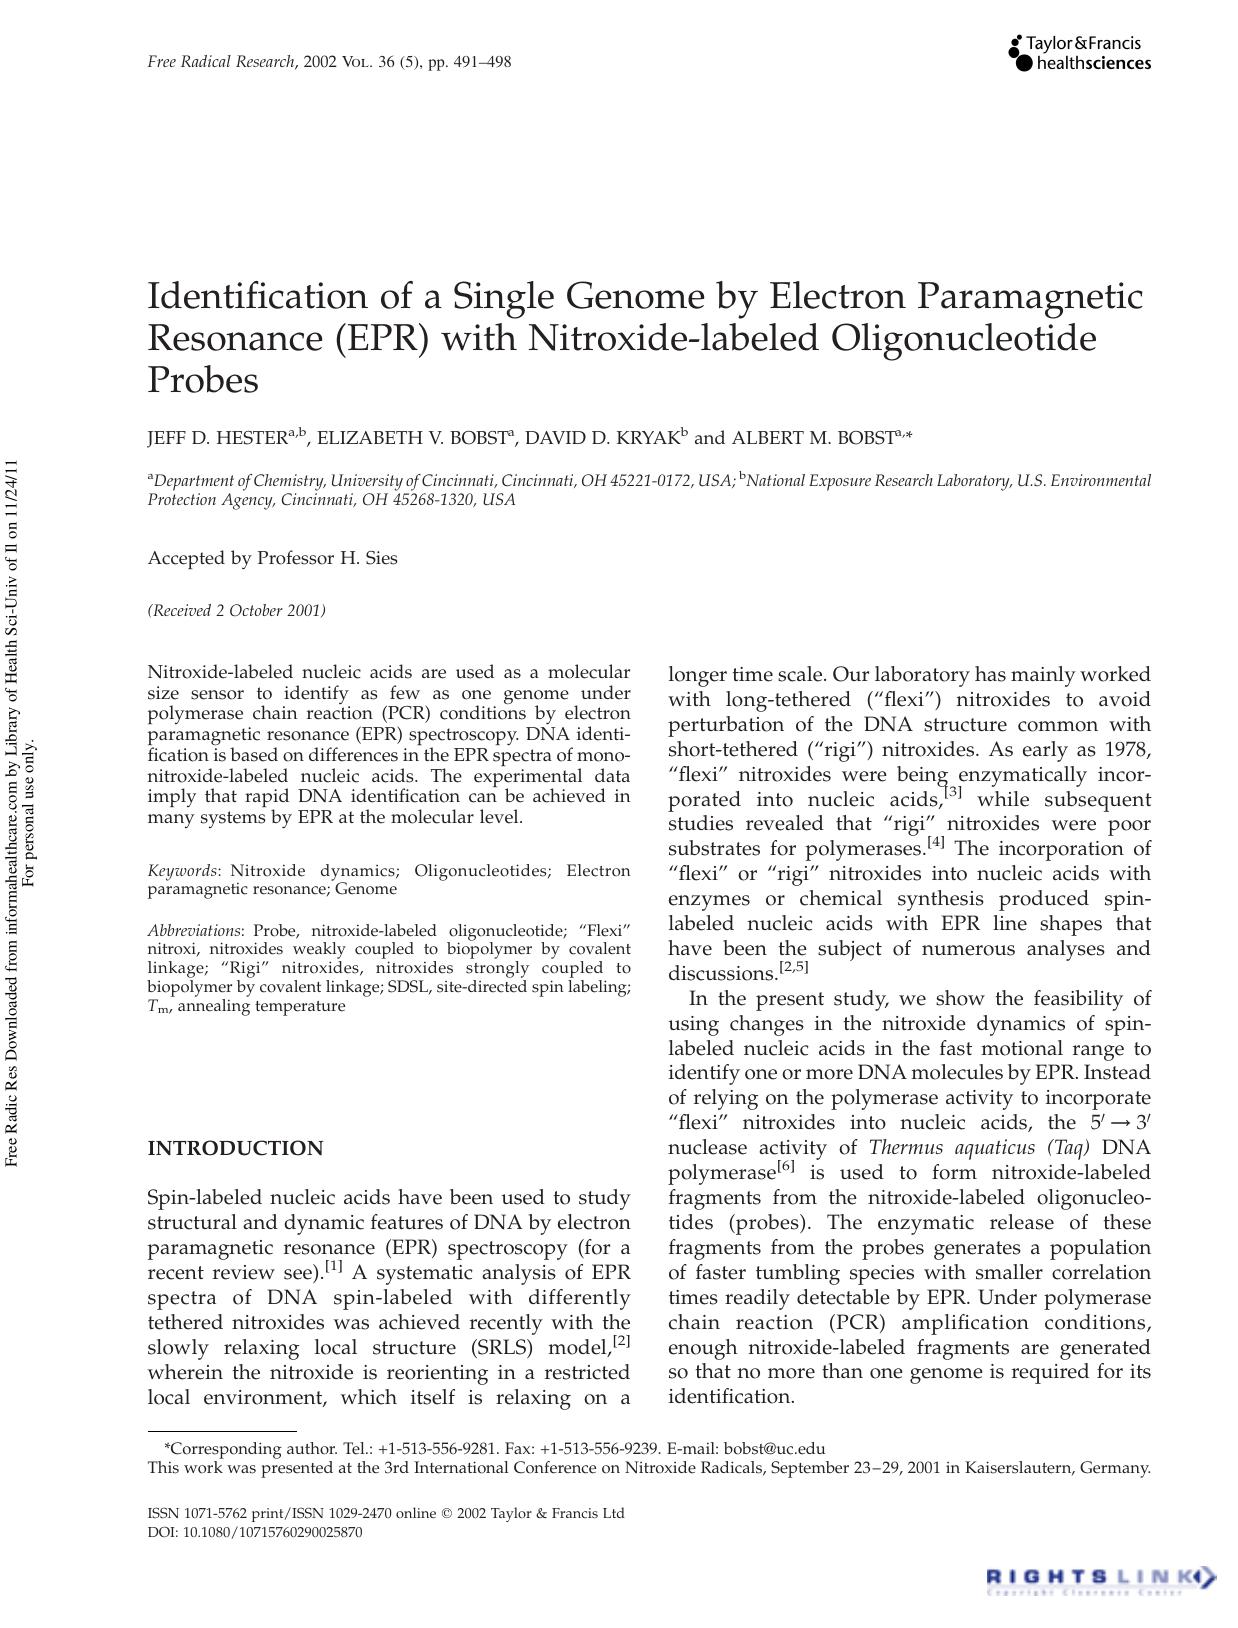 Identification of a Single Genome by Electron Paramagnetic Resonance (EPR) with Nitroxide-labeled Oligonucleotide Probes by Jeff D. Hester Elizabeth V. Bobst1 David D. Kryak2 & Albert M. Bobst1